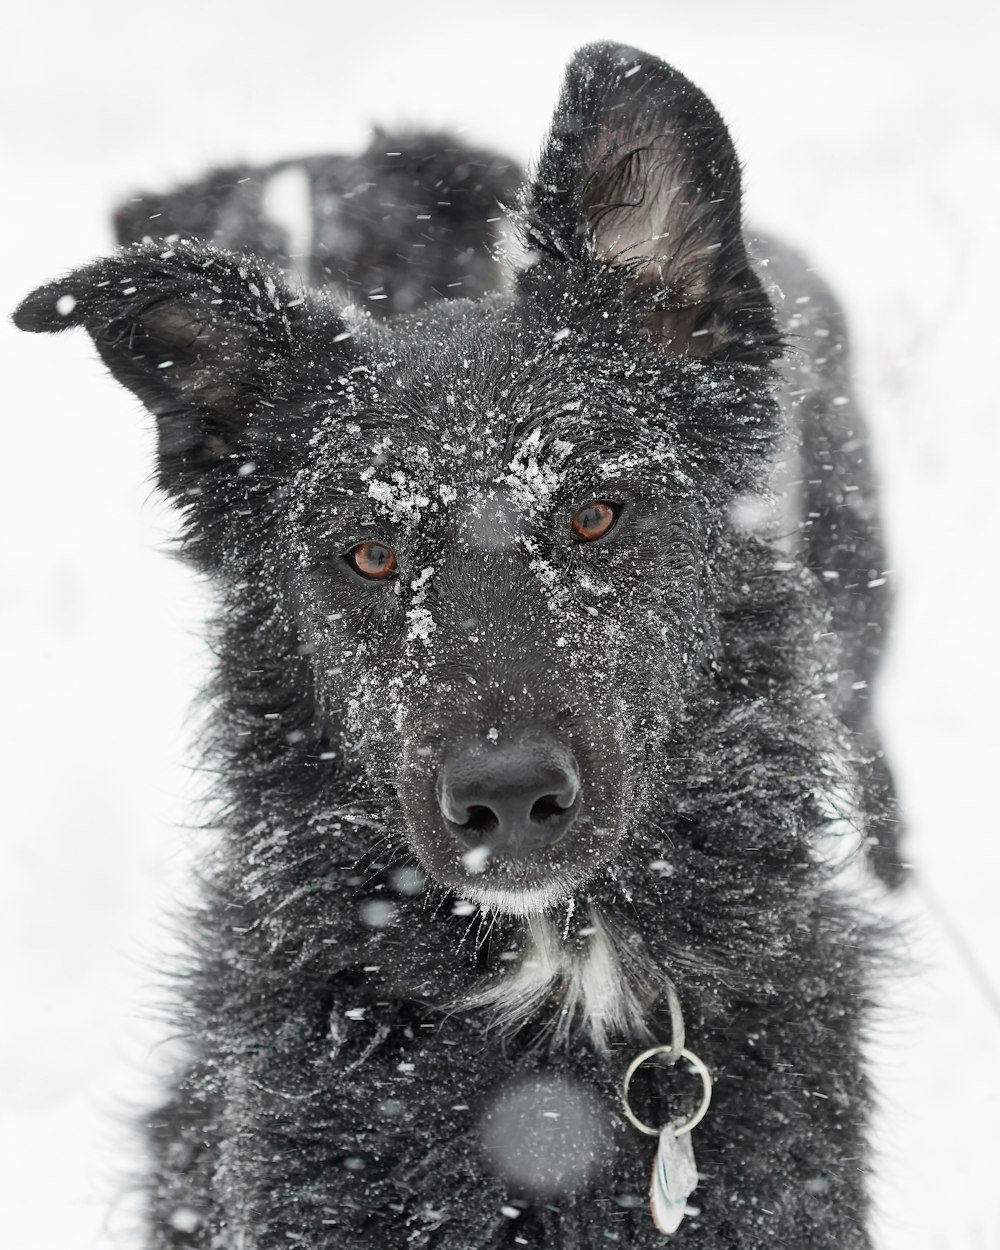 black dog in snow terrain during daytime